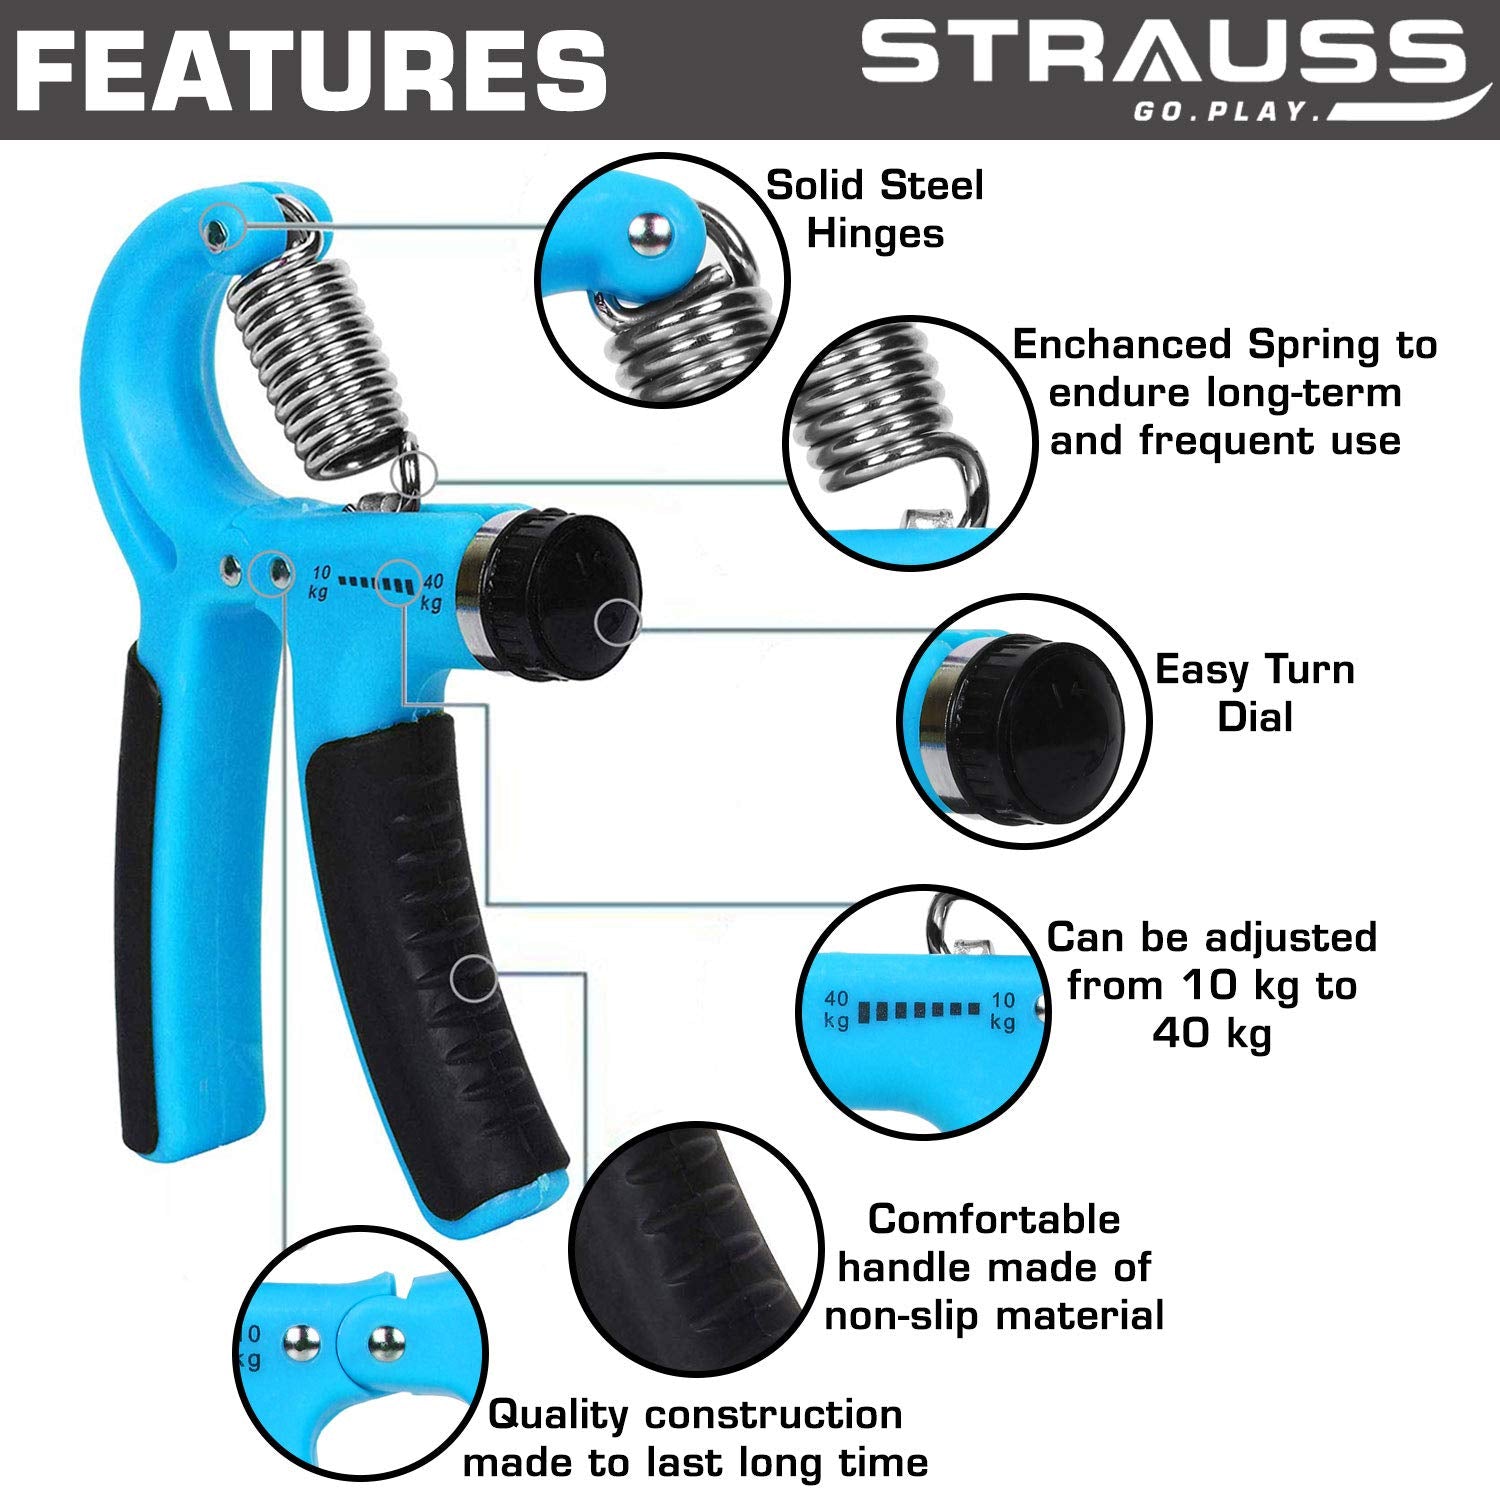 Strauss Adjustable Hand Grip Strengthener, (Black/Blue) and Wrist Exerciser, Black